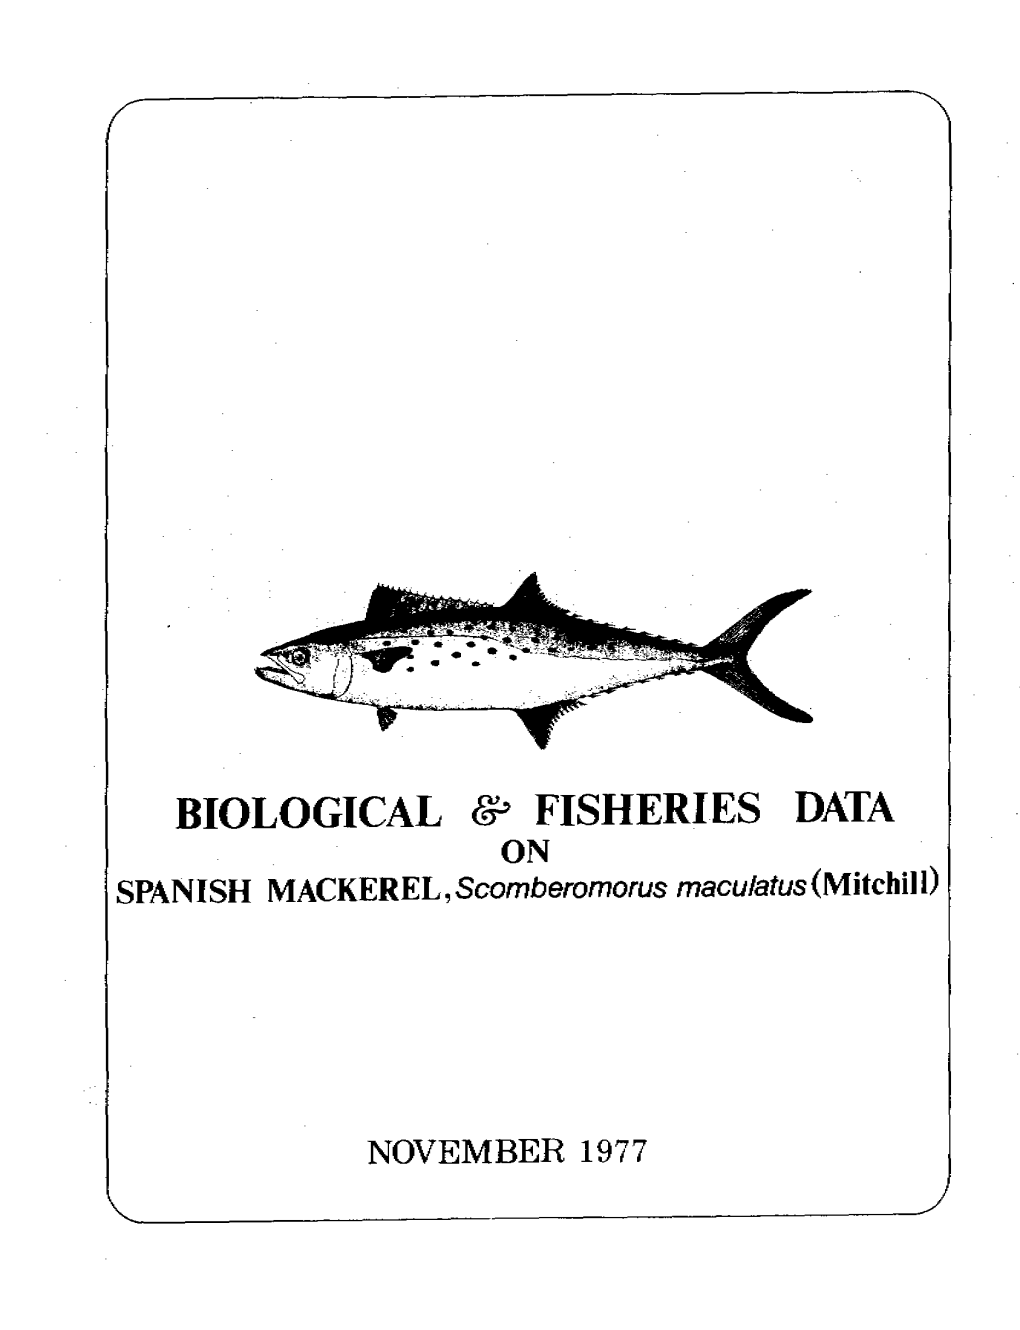 Biological and Fisheries Data on Spanish Mackerel, Scomberomorus